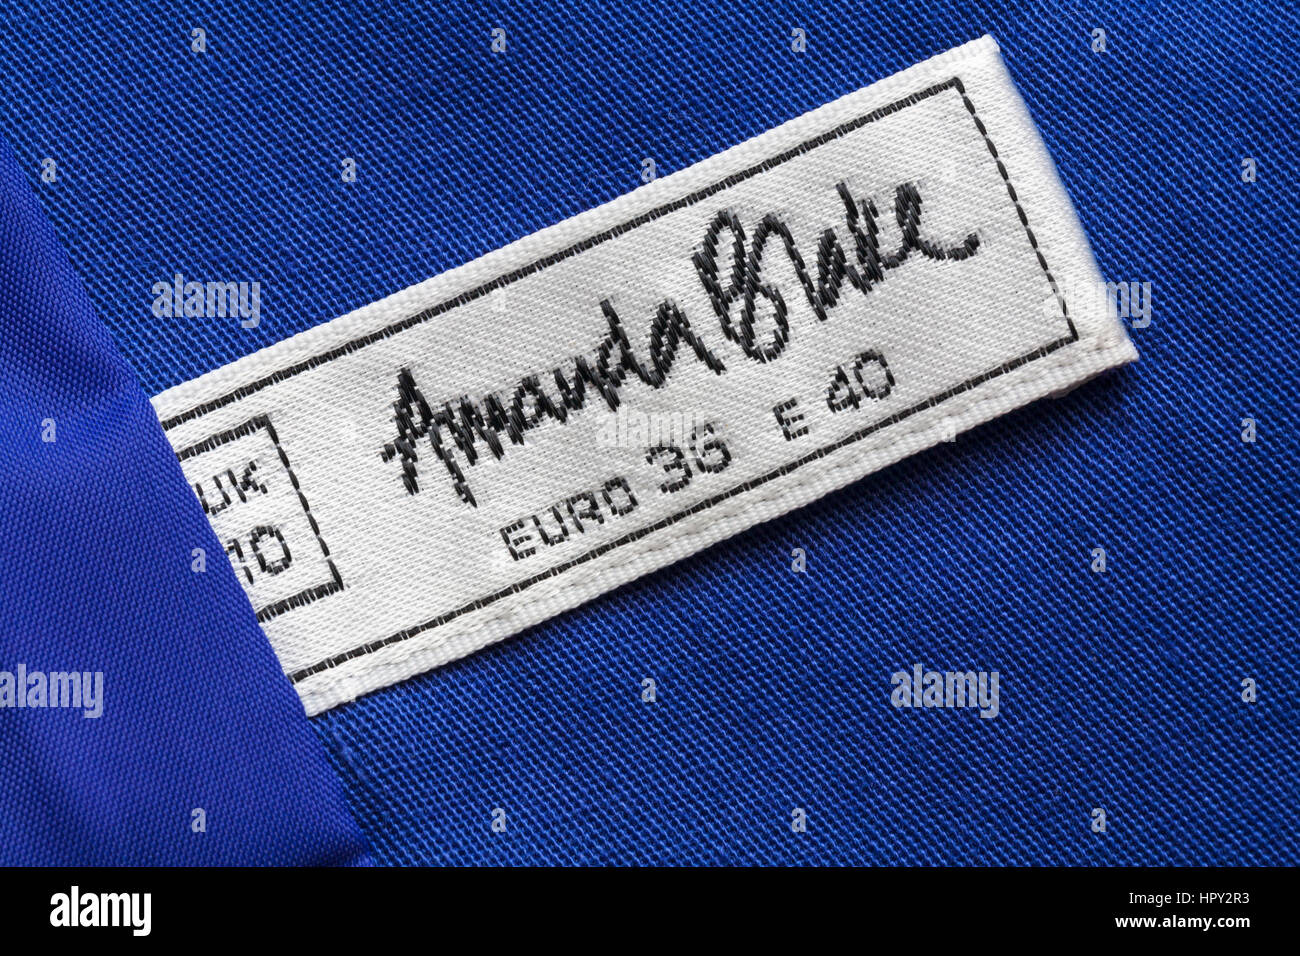 Amanda Blake label in woman's blue jacket Stock Photo